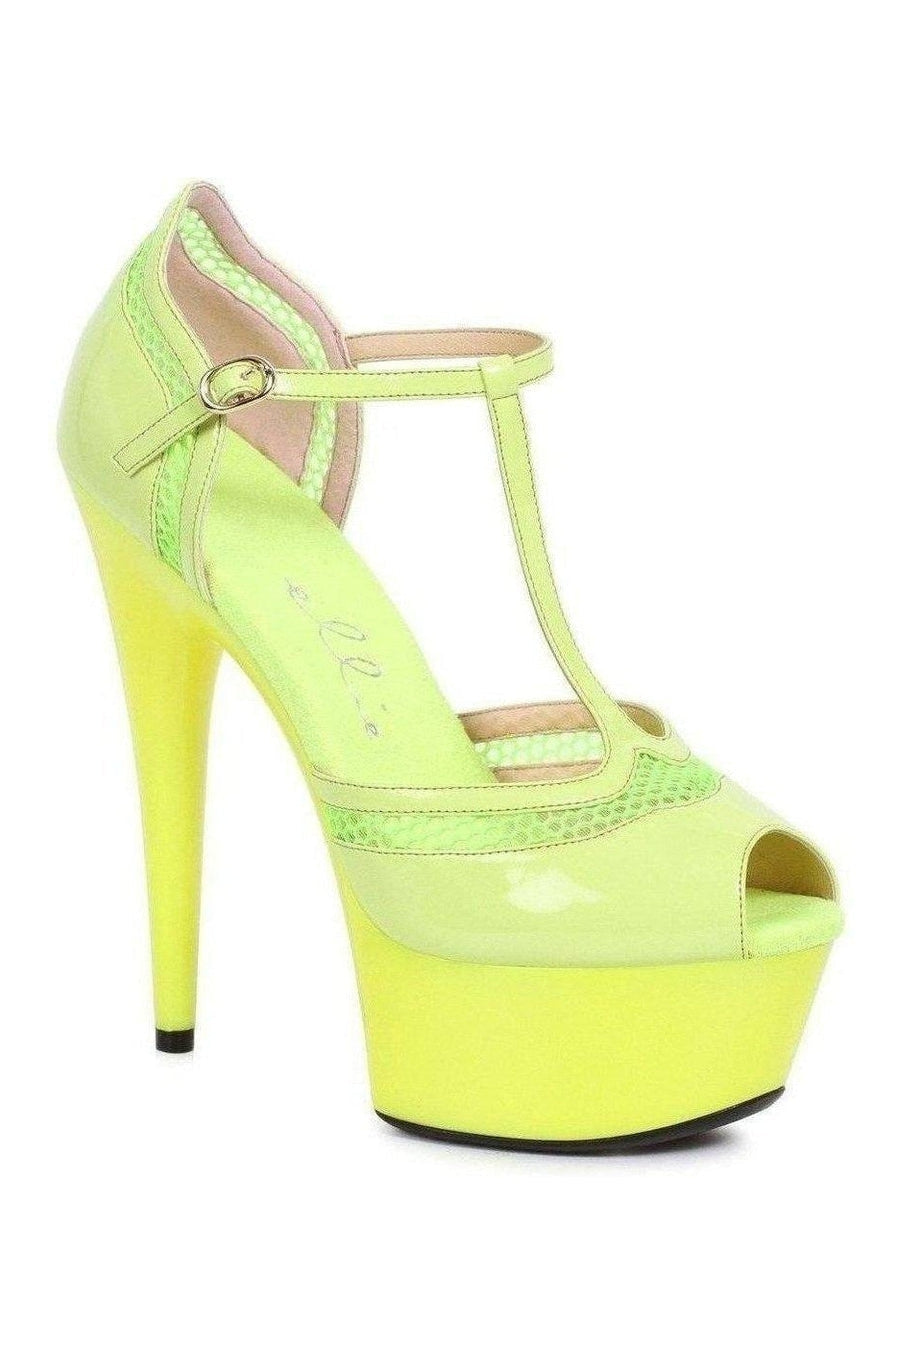 Ellie Shoes Yellow Pumps Platform Stripper Shoes | Buy at Sexyshoes.com